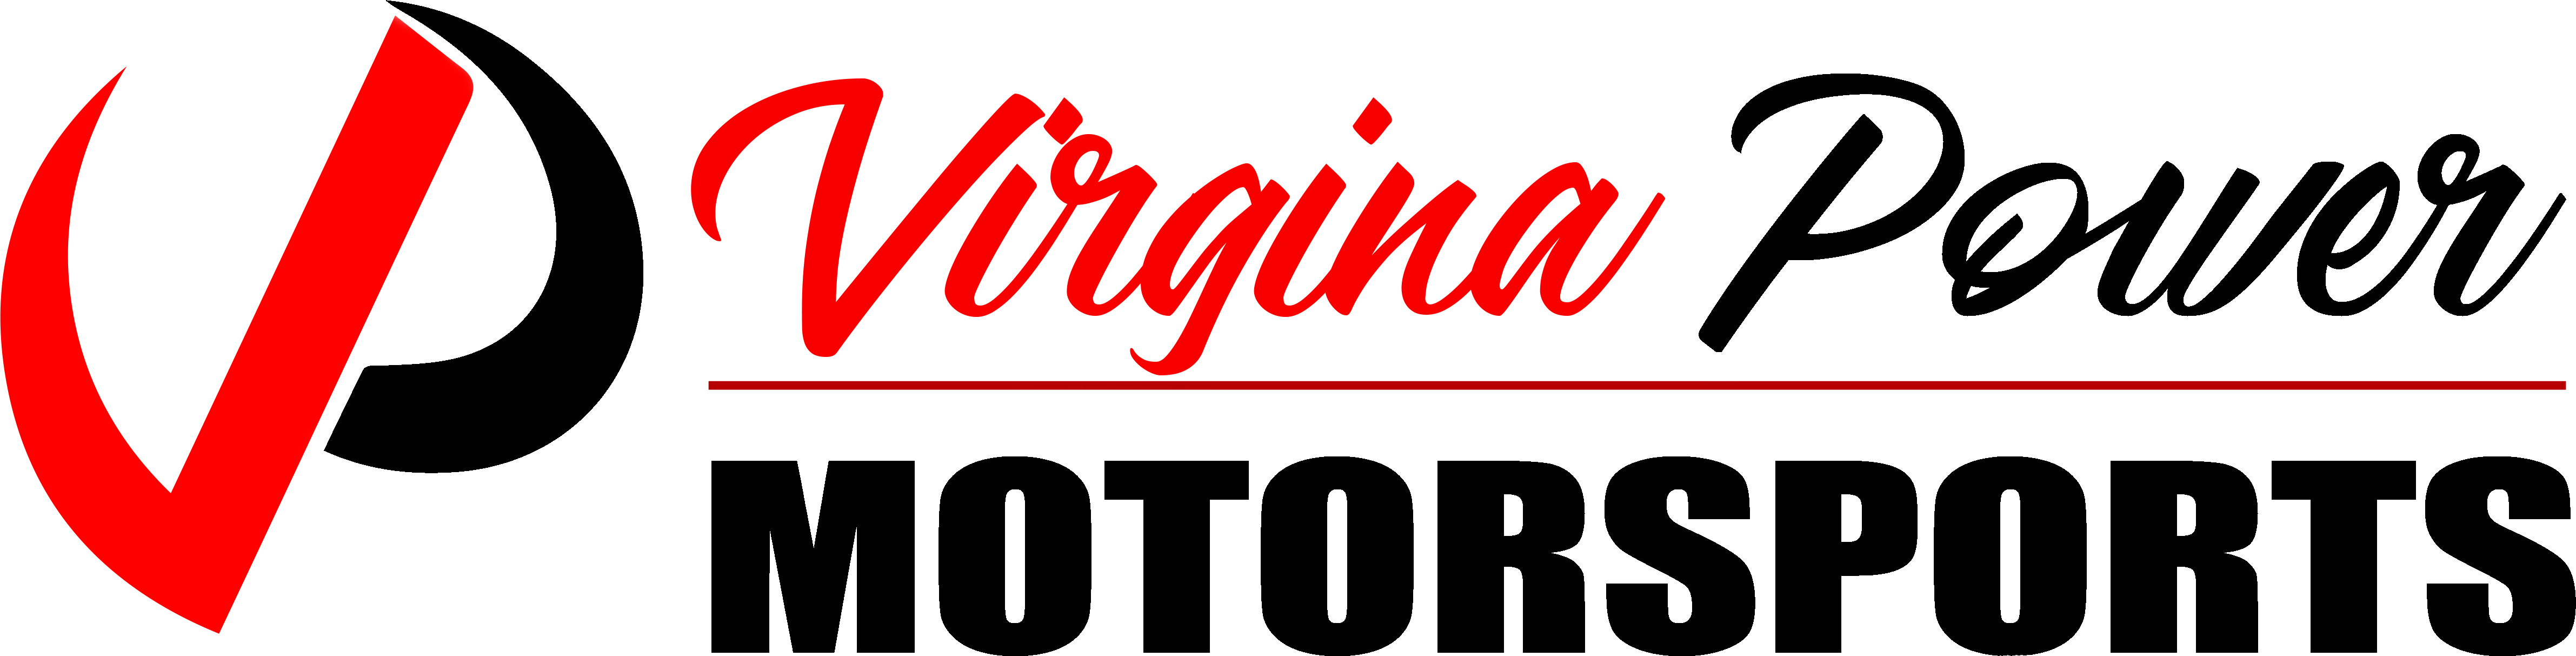 Virginia Motorcycle Dealer, Can-Am, Sea-Doo, Kymco, Polaris, Yamaha Golf Cars, Virginia Power Motorsports Ruckersville